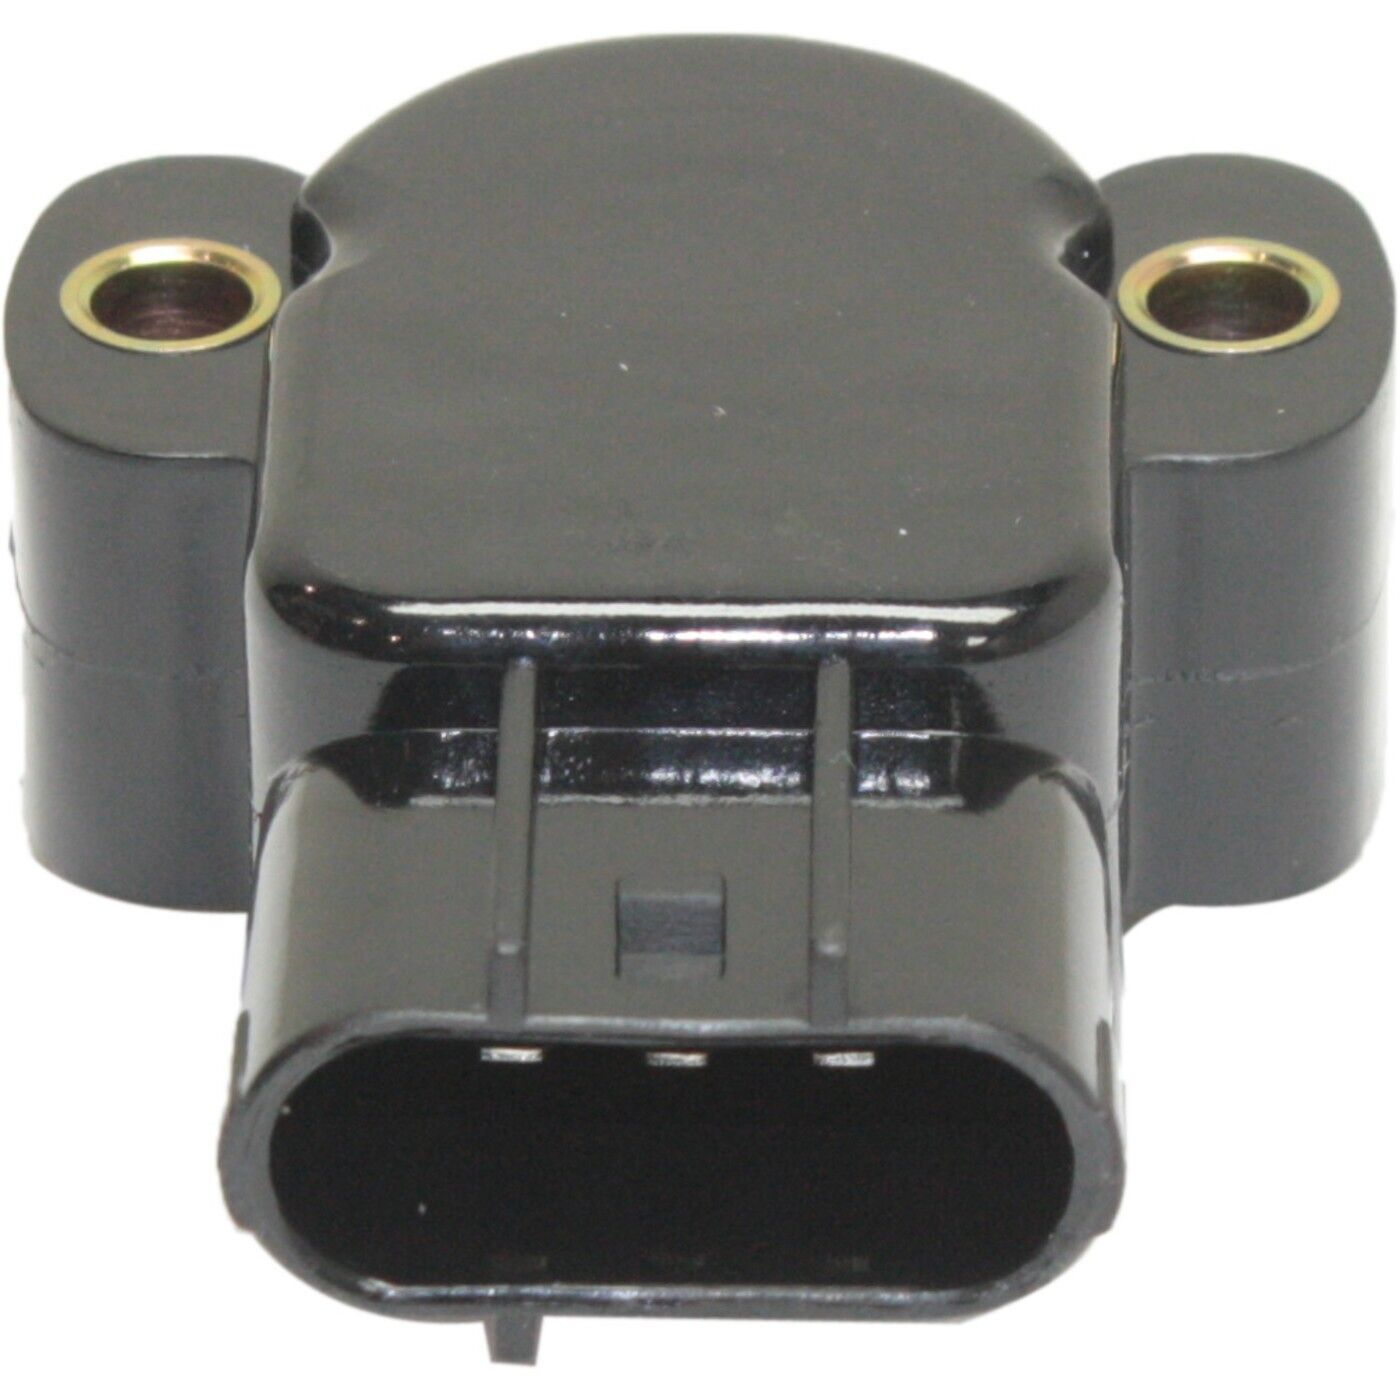 Throttle Position Sensor for Explorer Pickup Ford Escape Ranger Taurus Sable MPV